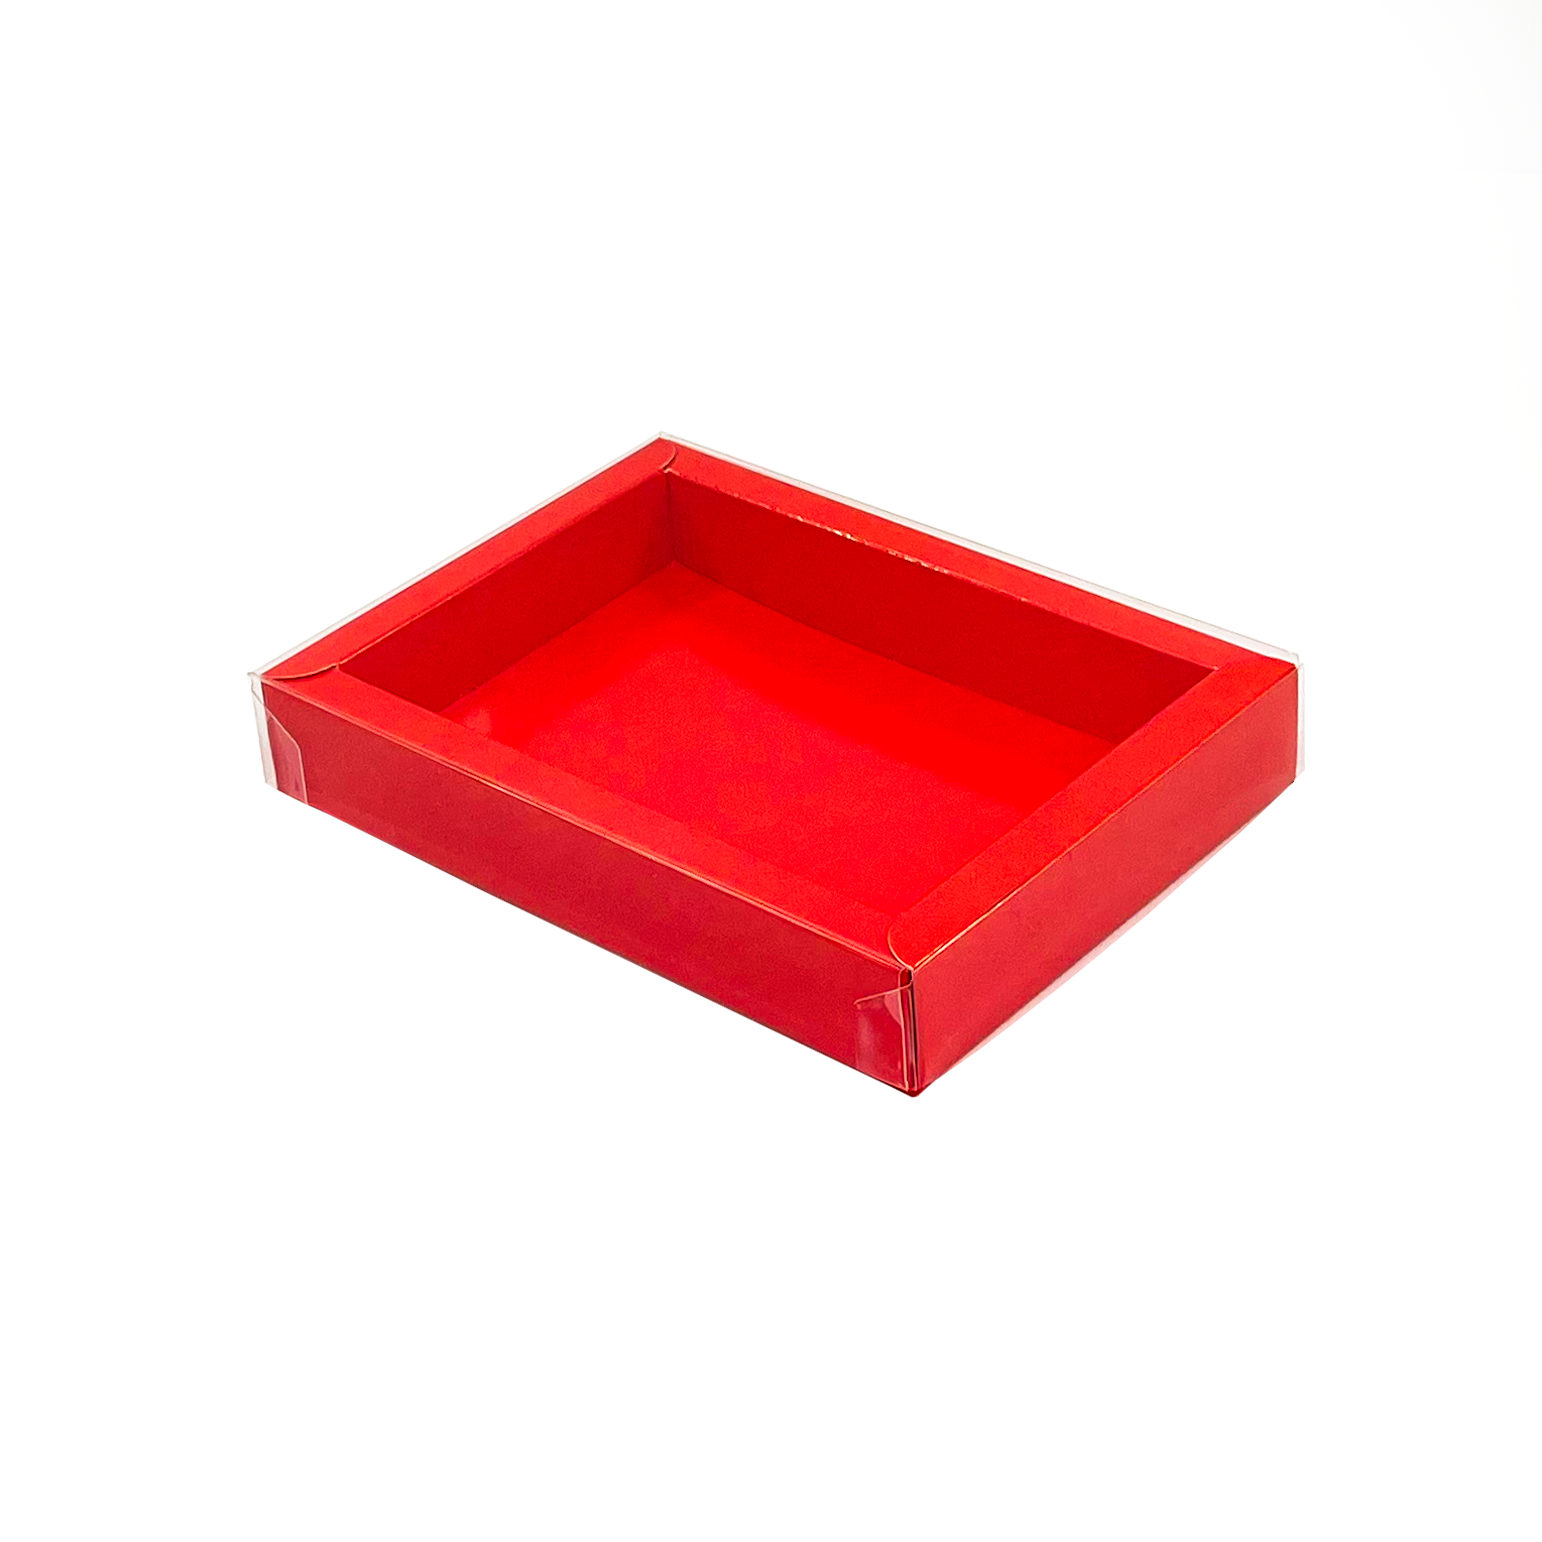 GK1 Letterdoosje met transparante deksel (rood) - 130*90*27mm - 100 stuks